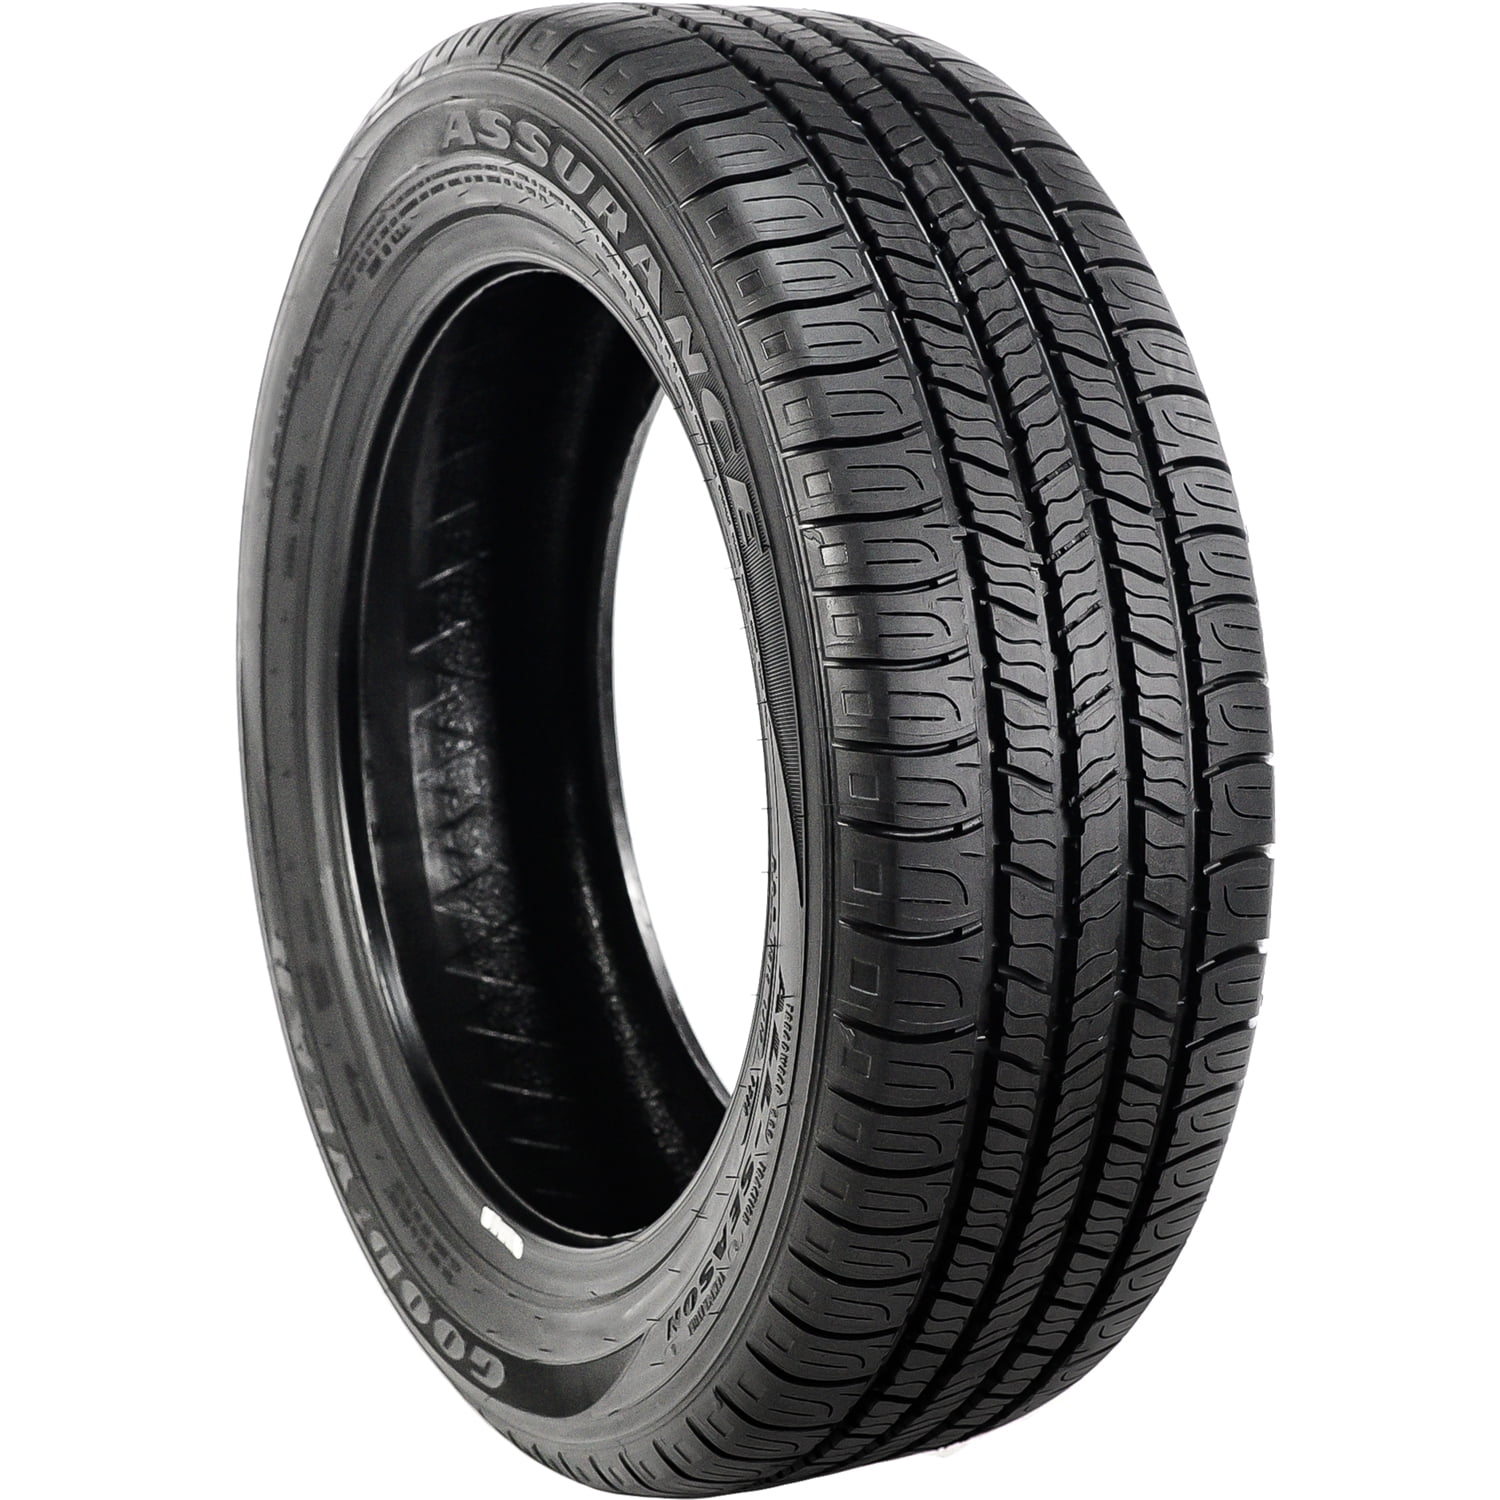 225/60R16 T Goodyear 98 Tire All-Season Assurance